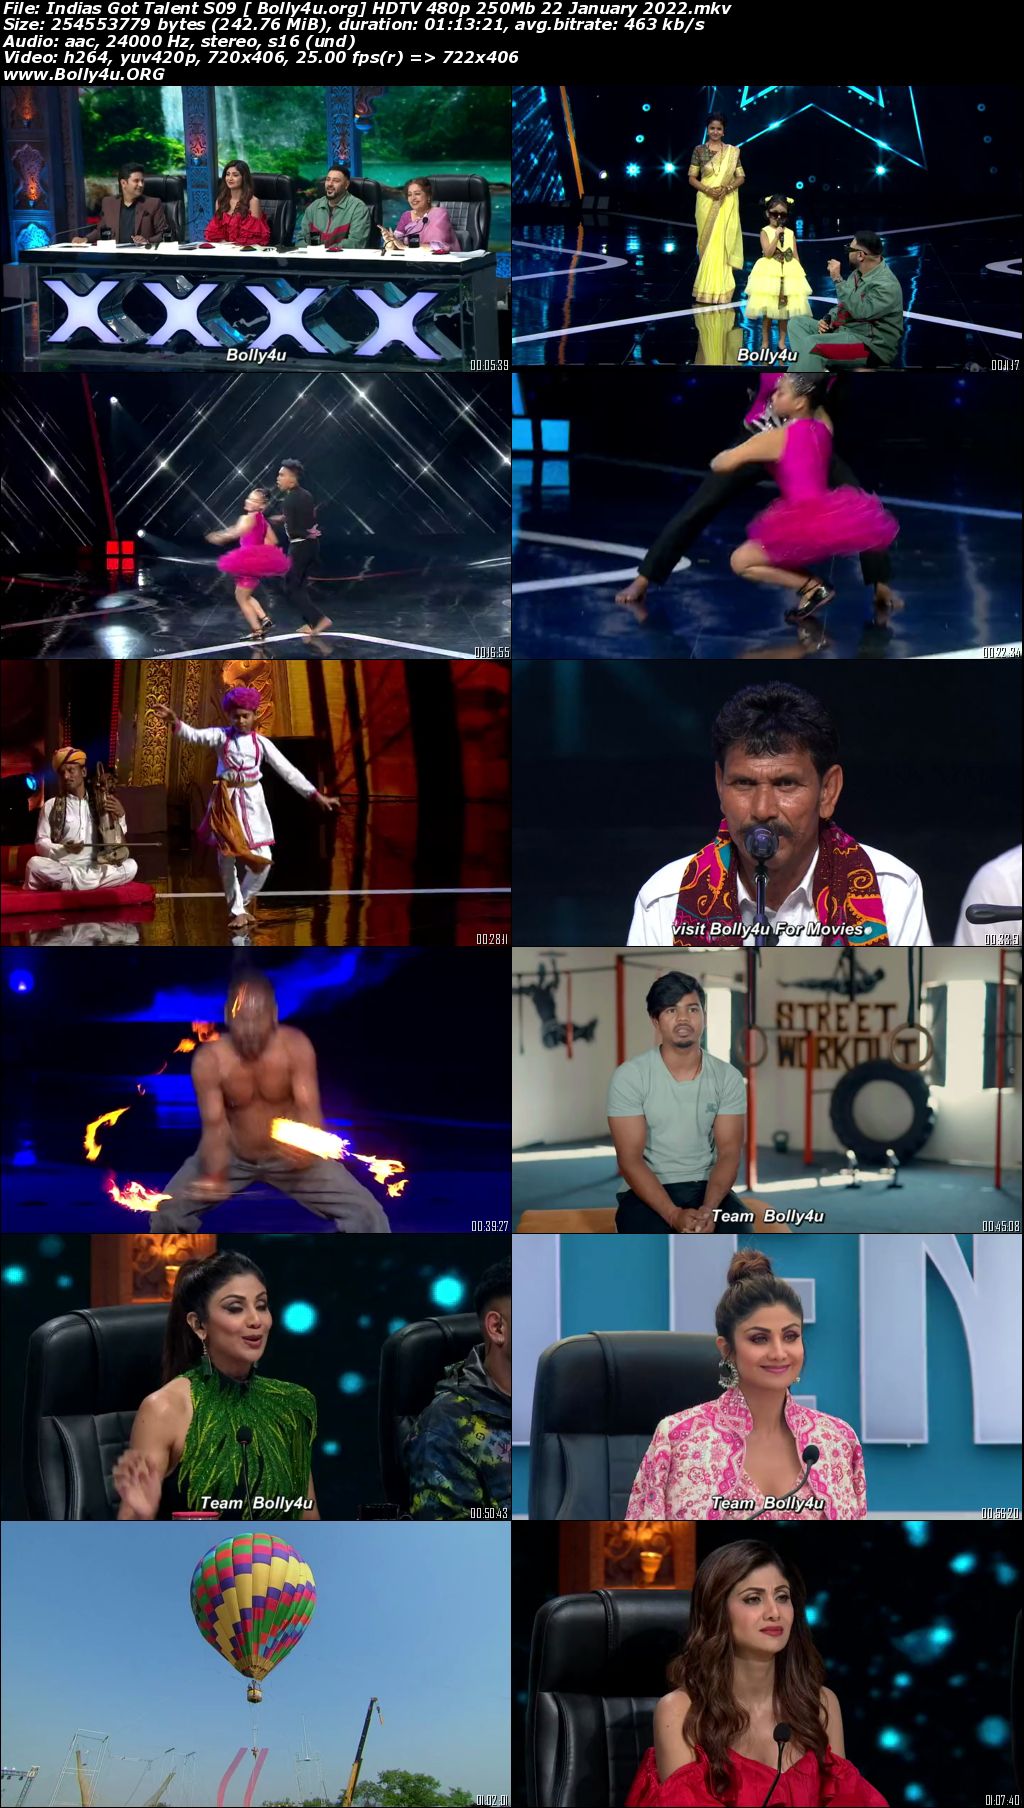 Indias Got Talent 9 HDTV 480p 250Mb 22 January 2022 Download